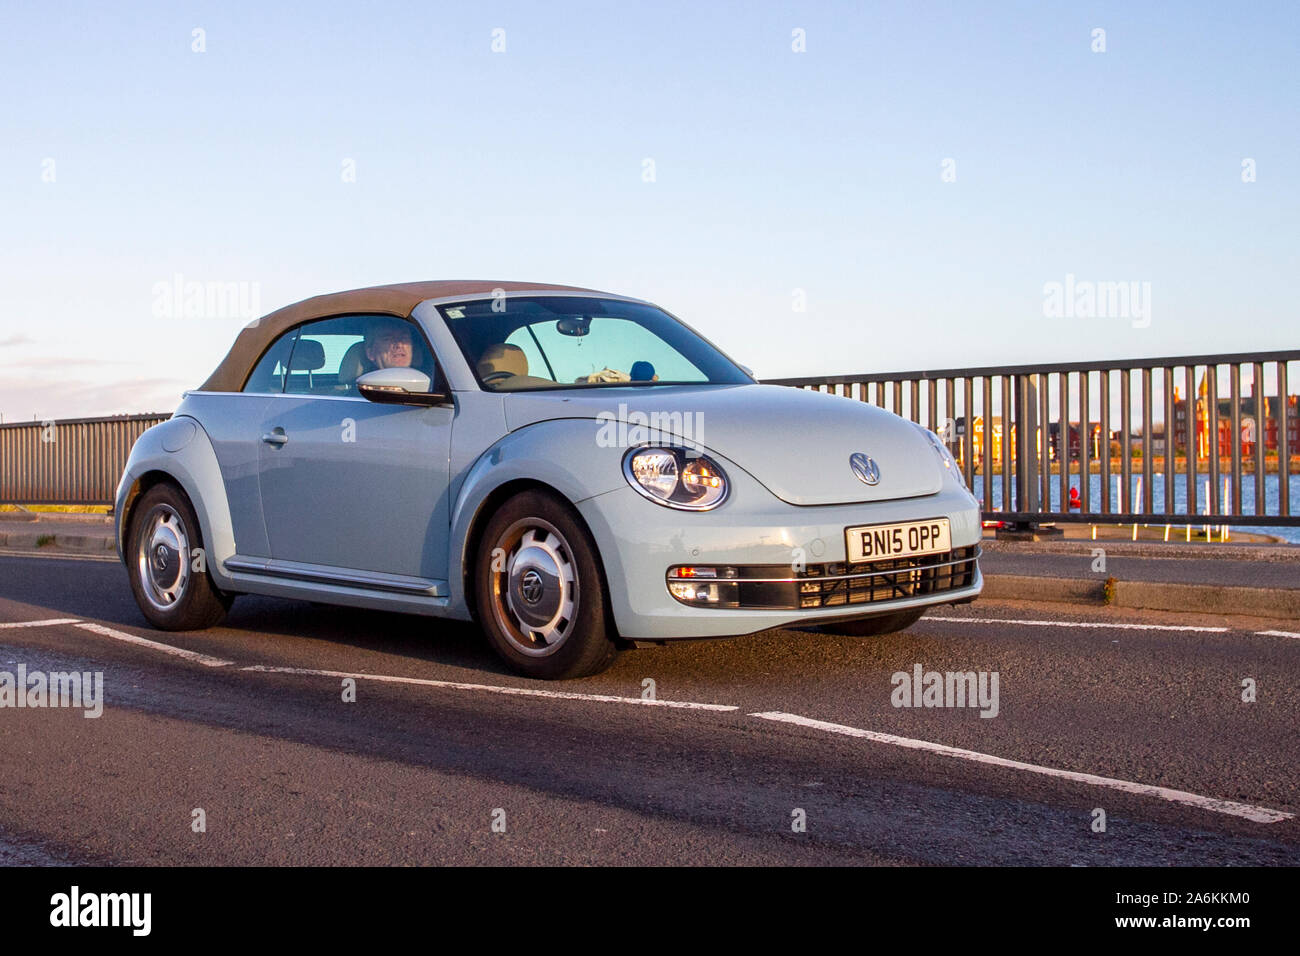 2015 blue Vw Volkswagen Beetle Design TDI Bmotion on the seafront promenade, Southport, Merseyside, UK Stock Photo